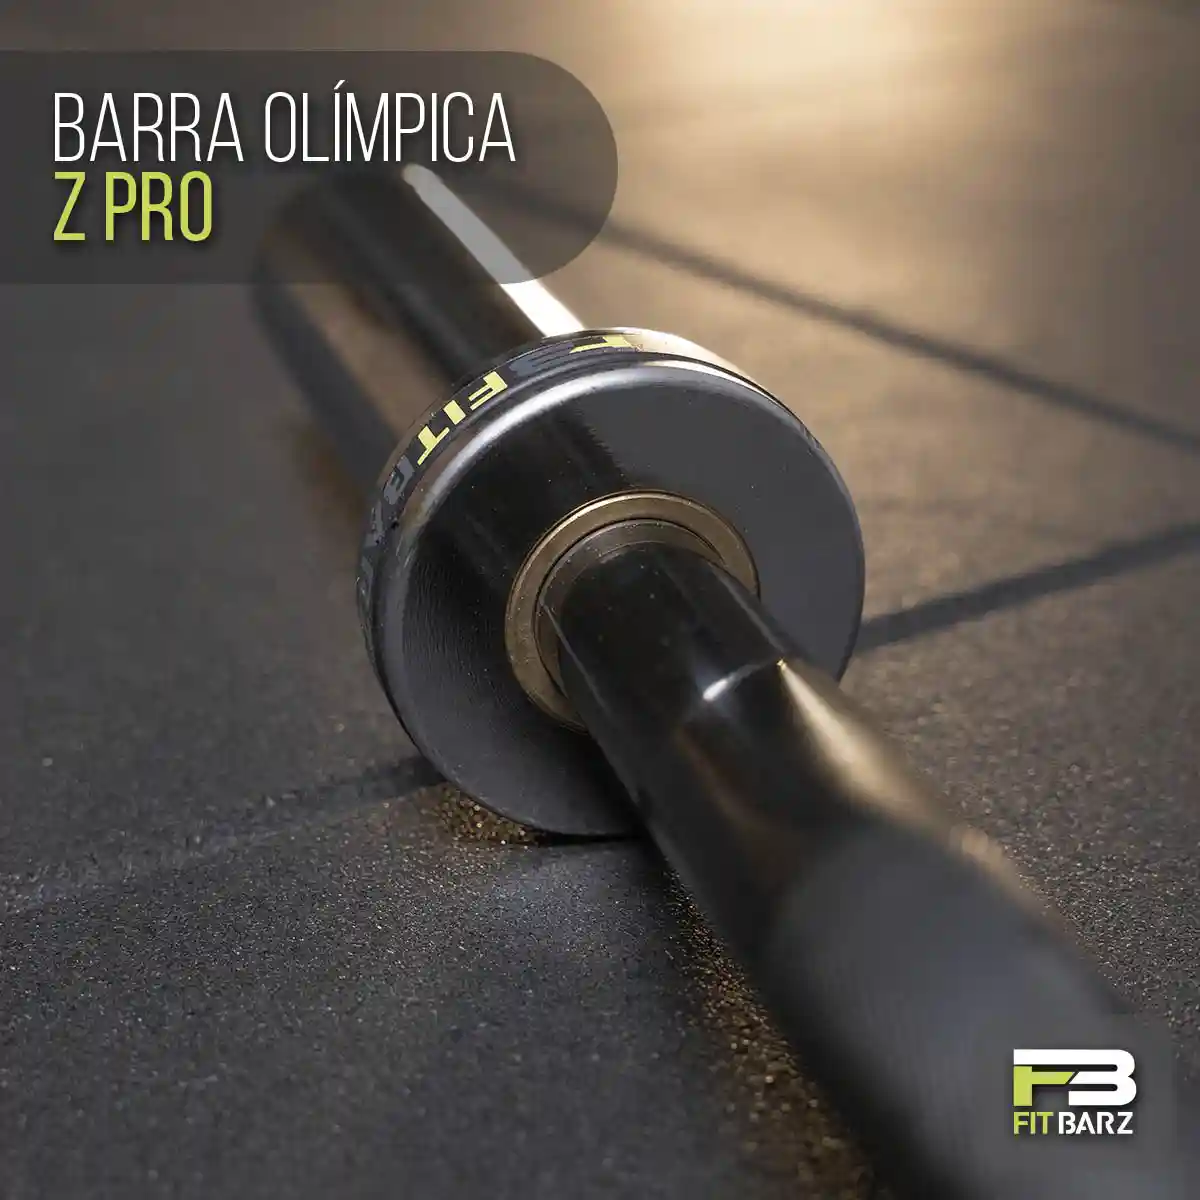 BARRA Z OLIMPICA QUALITY - Ultra Fitness